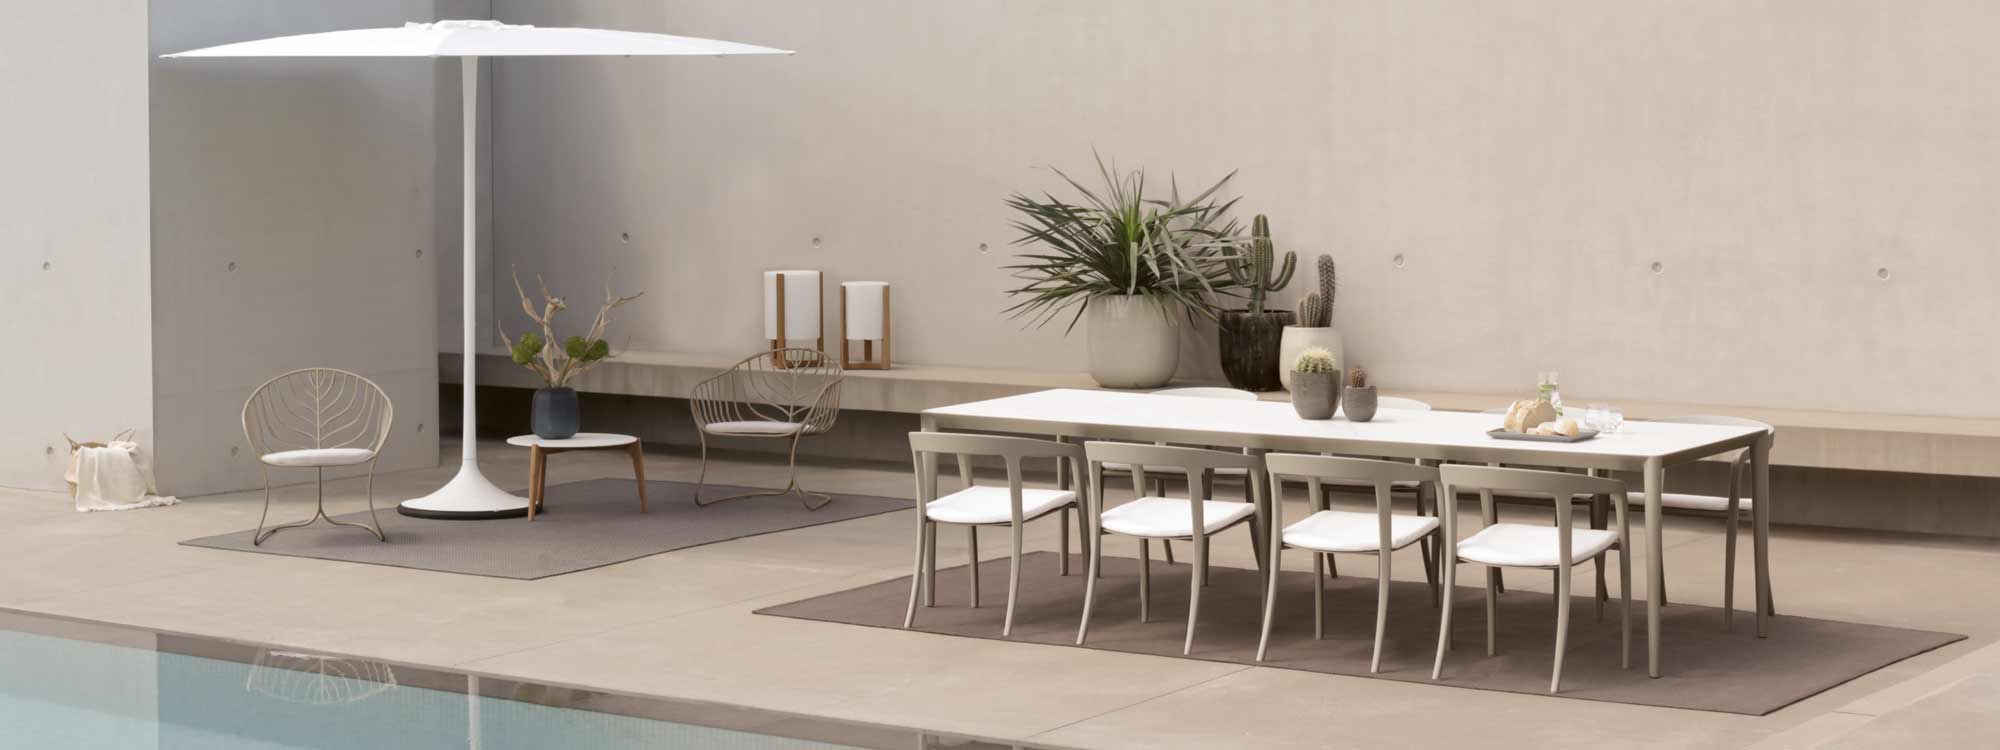 Image of Royal Botania Jive chair in Mushroom finish and U-nite table in Sand finish on chic, minimalist terrace